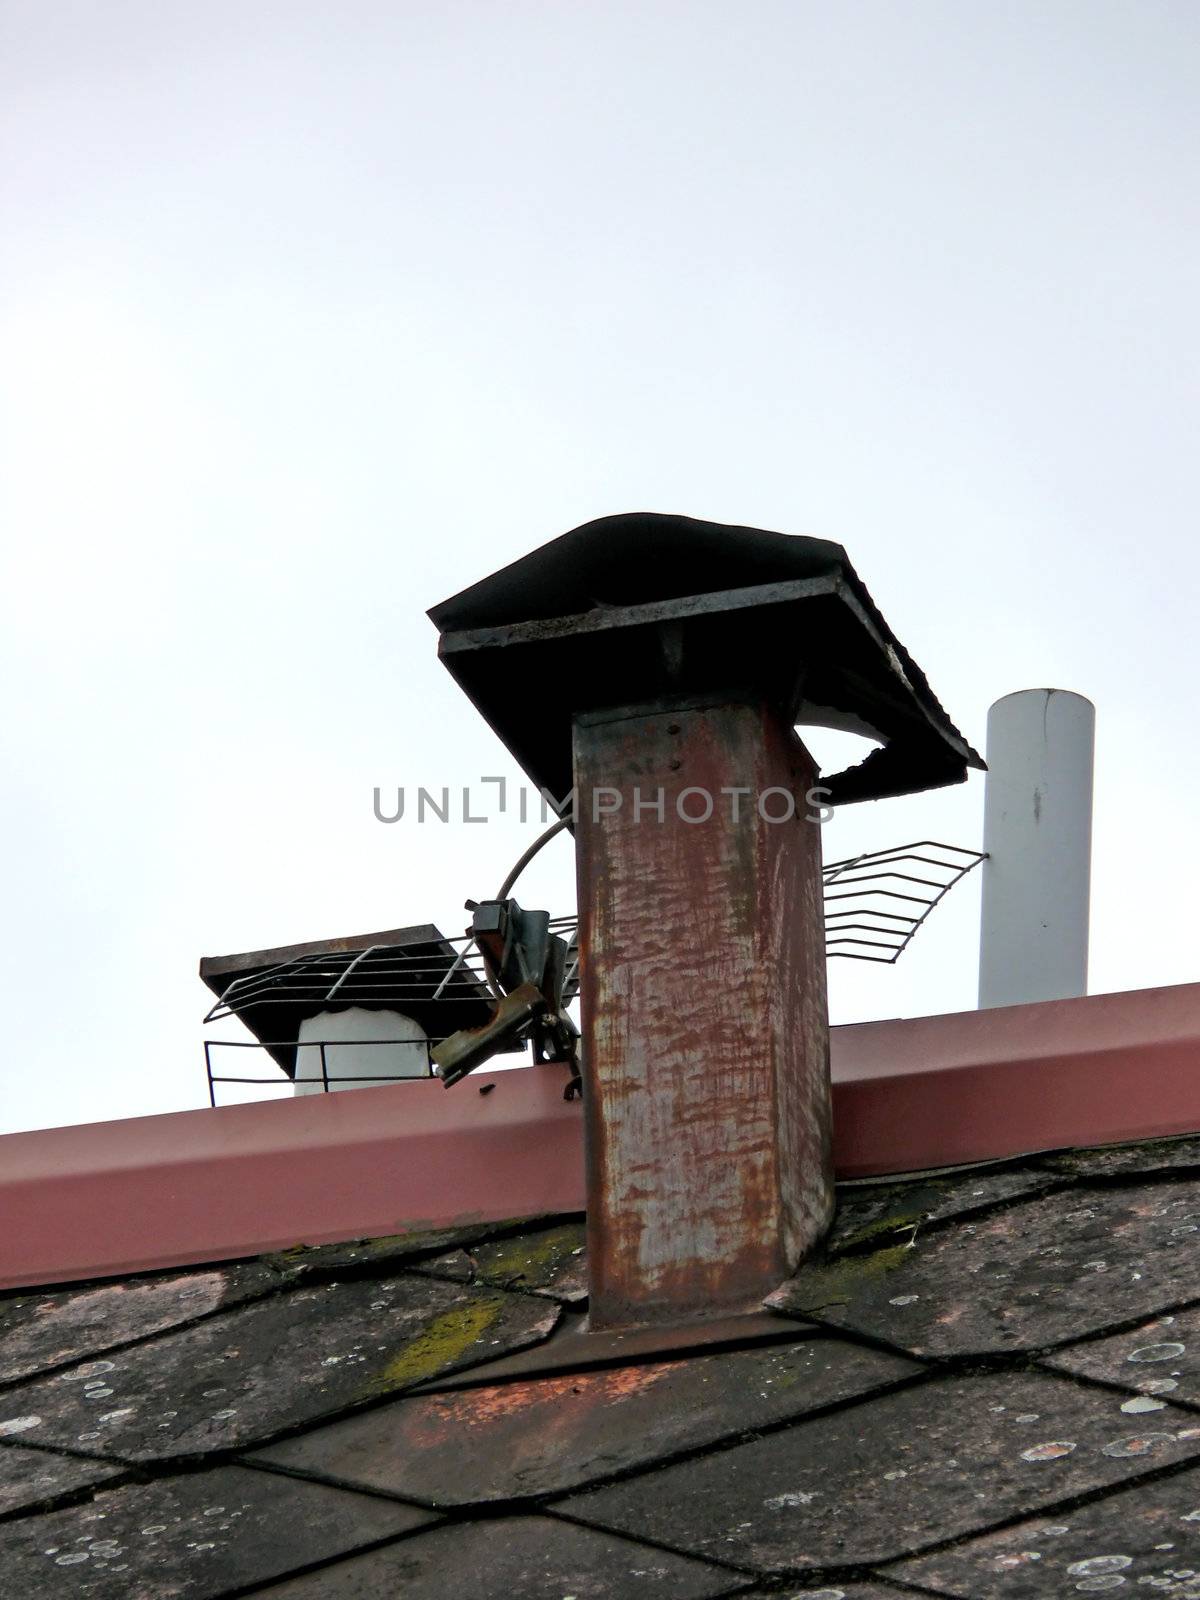 portrait of broken antenna and rusty chimney